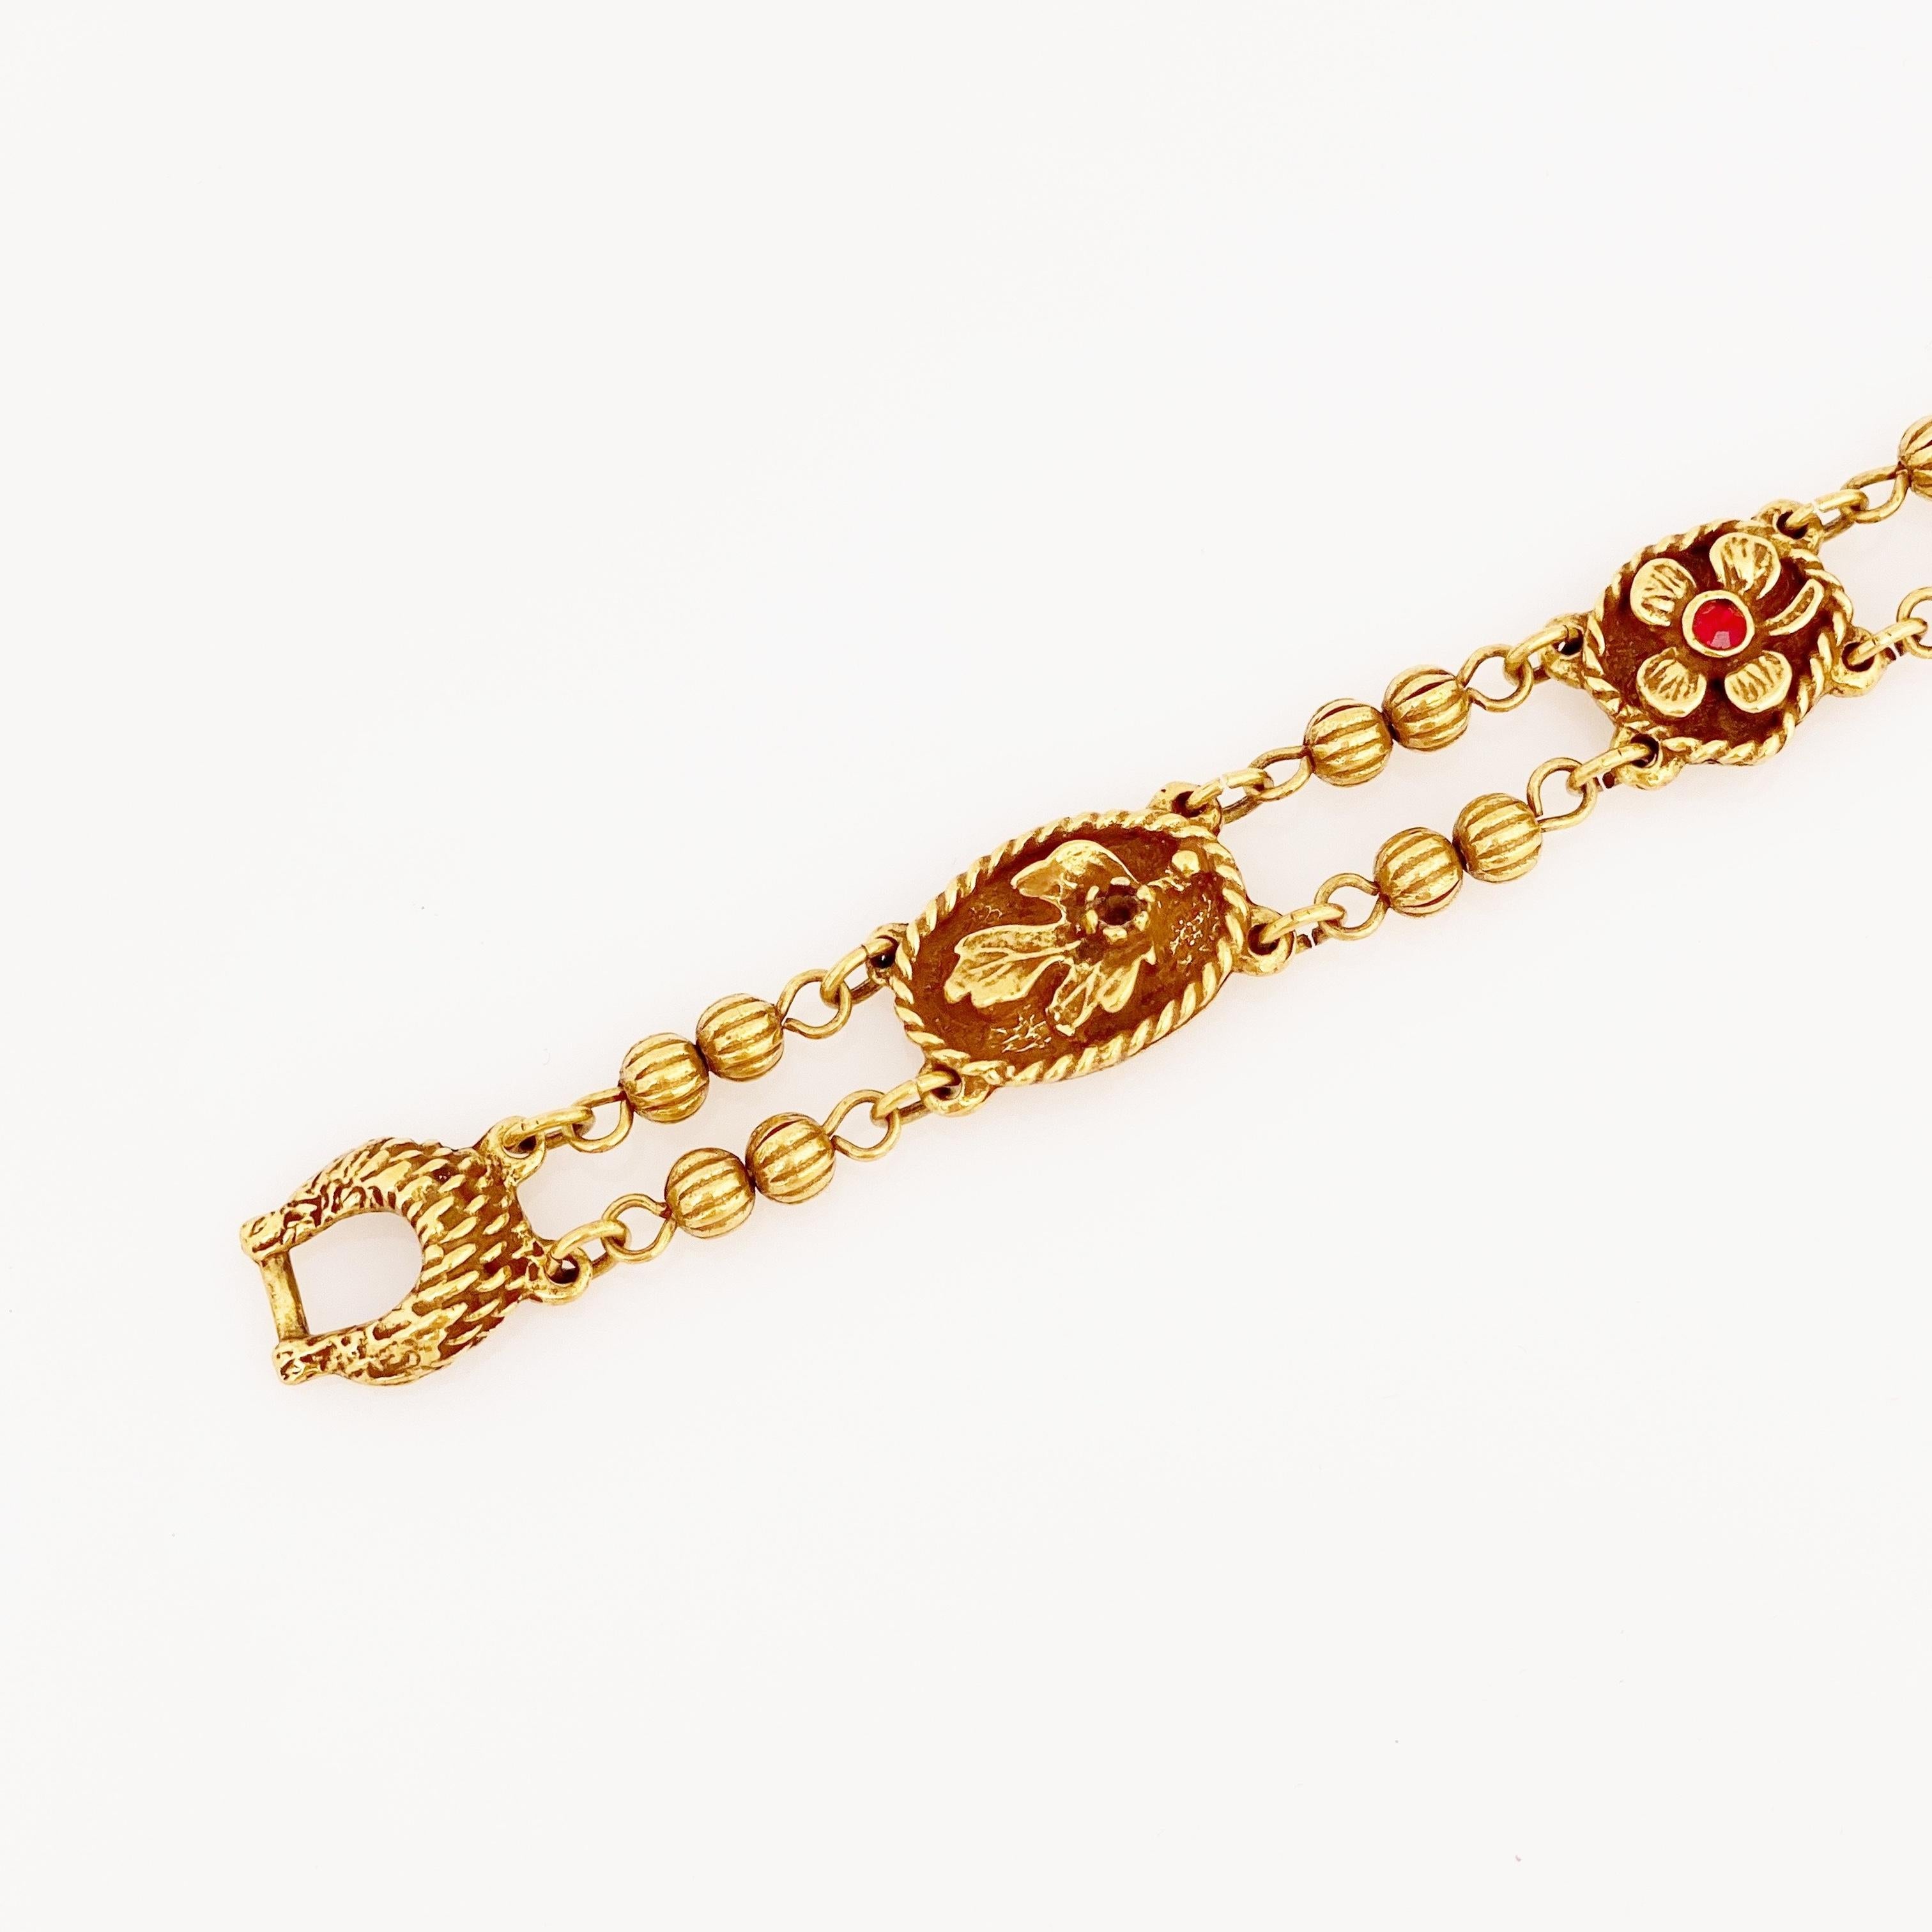 Modern Gold Beaded Victorian Revival Bracelet With Clover & Heart Motif, 1960s